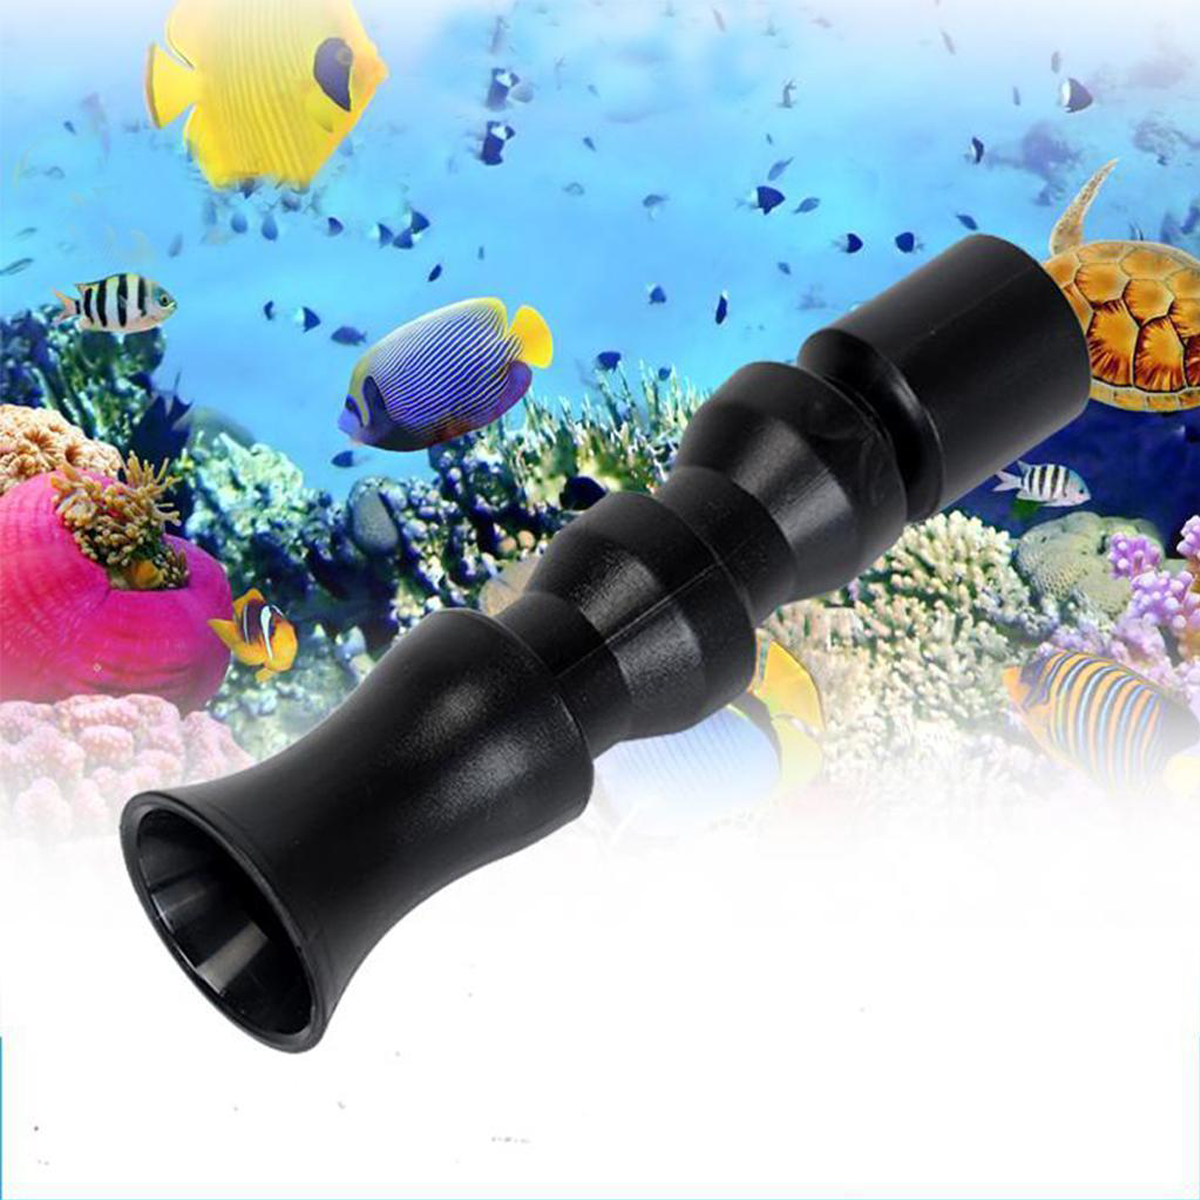 2025mm-Aquarium-Fish-Tank-Water-Outlet-Nozzle-Return-Pipes-Plumbing-Fittings-1567989